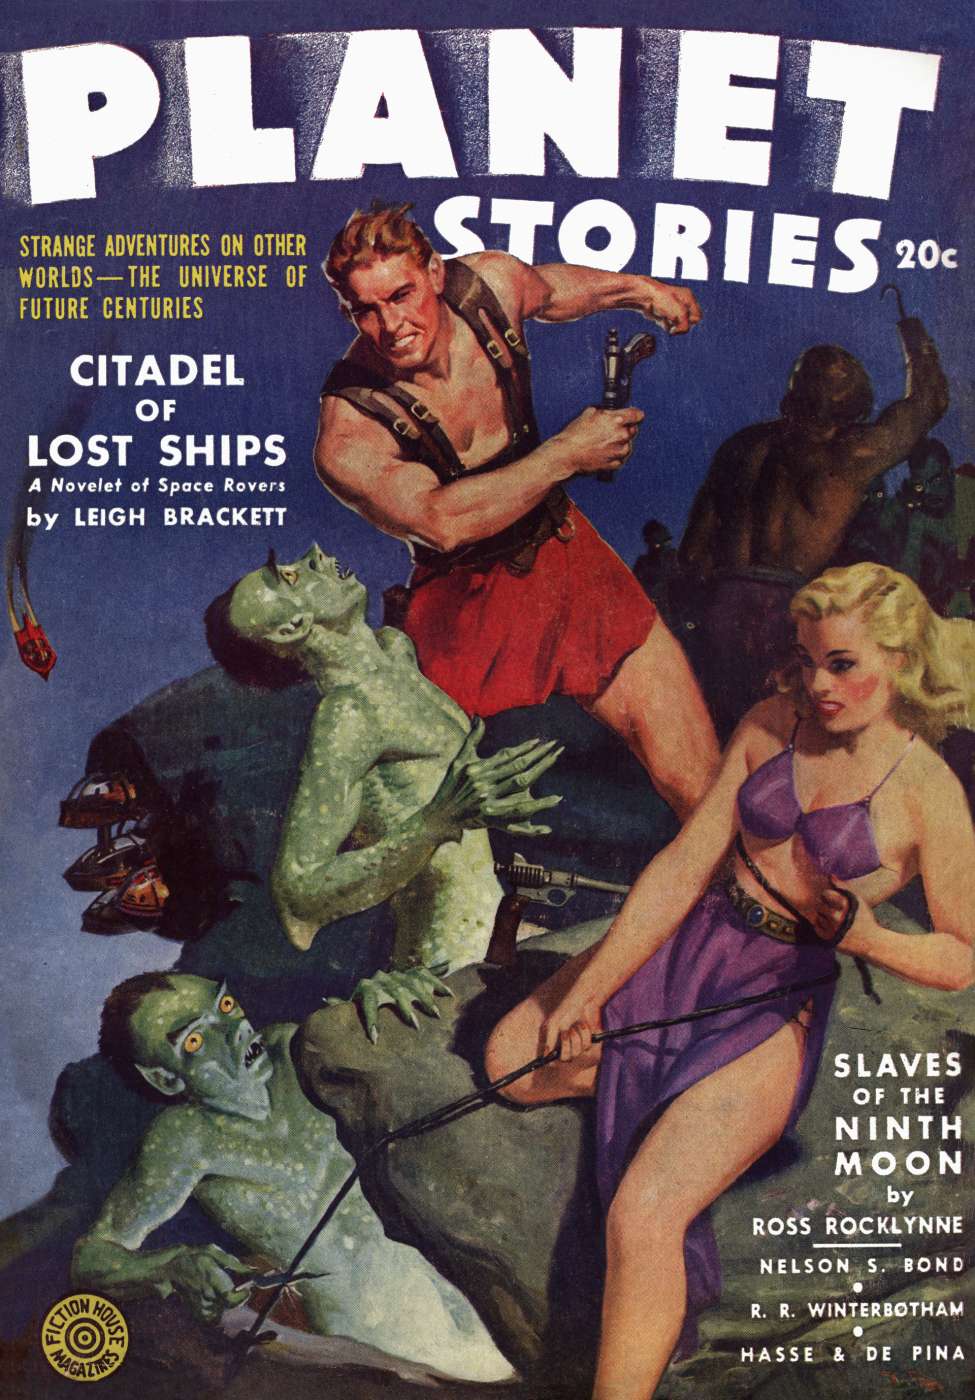 Book Cover For Planet Stories v2 2 - Citadel of Lost Ships - Leigh Brackett